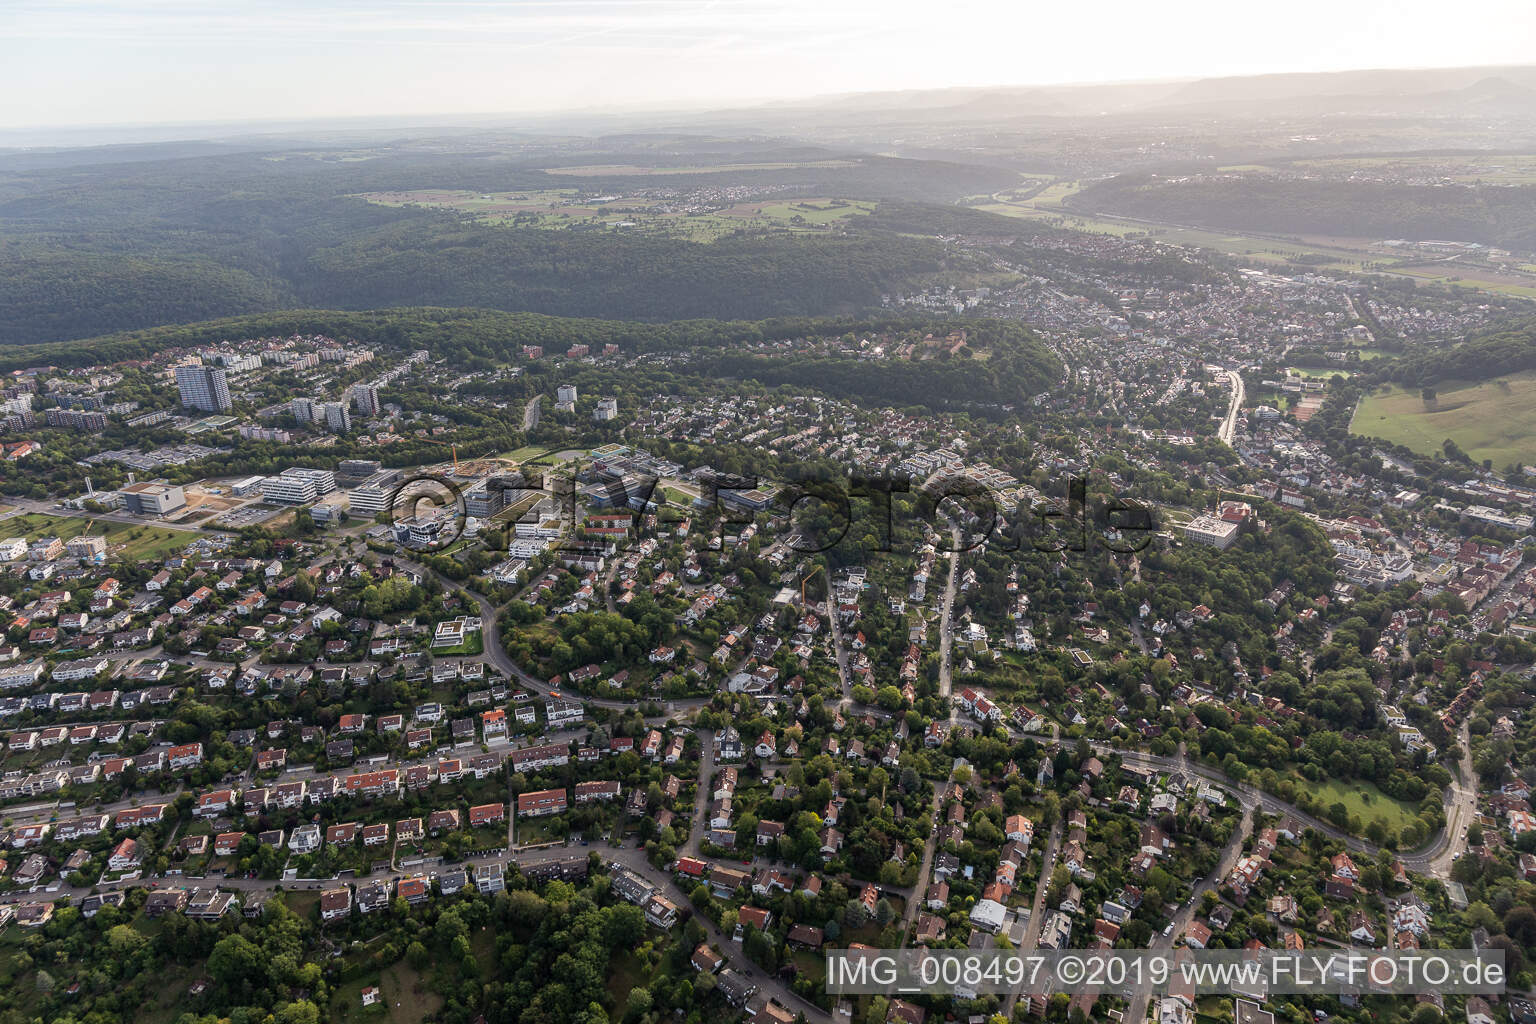 Aerial view of Tübingen in the state Baden-Wuerttemberg, Germany